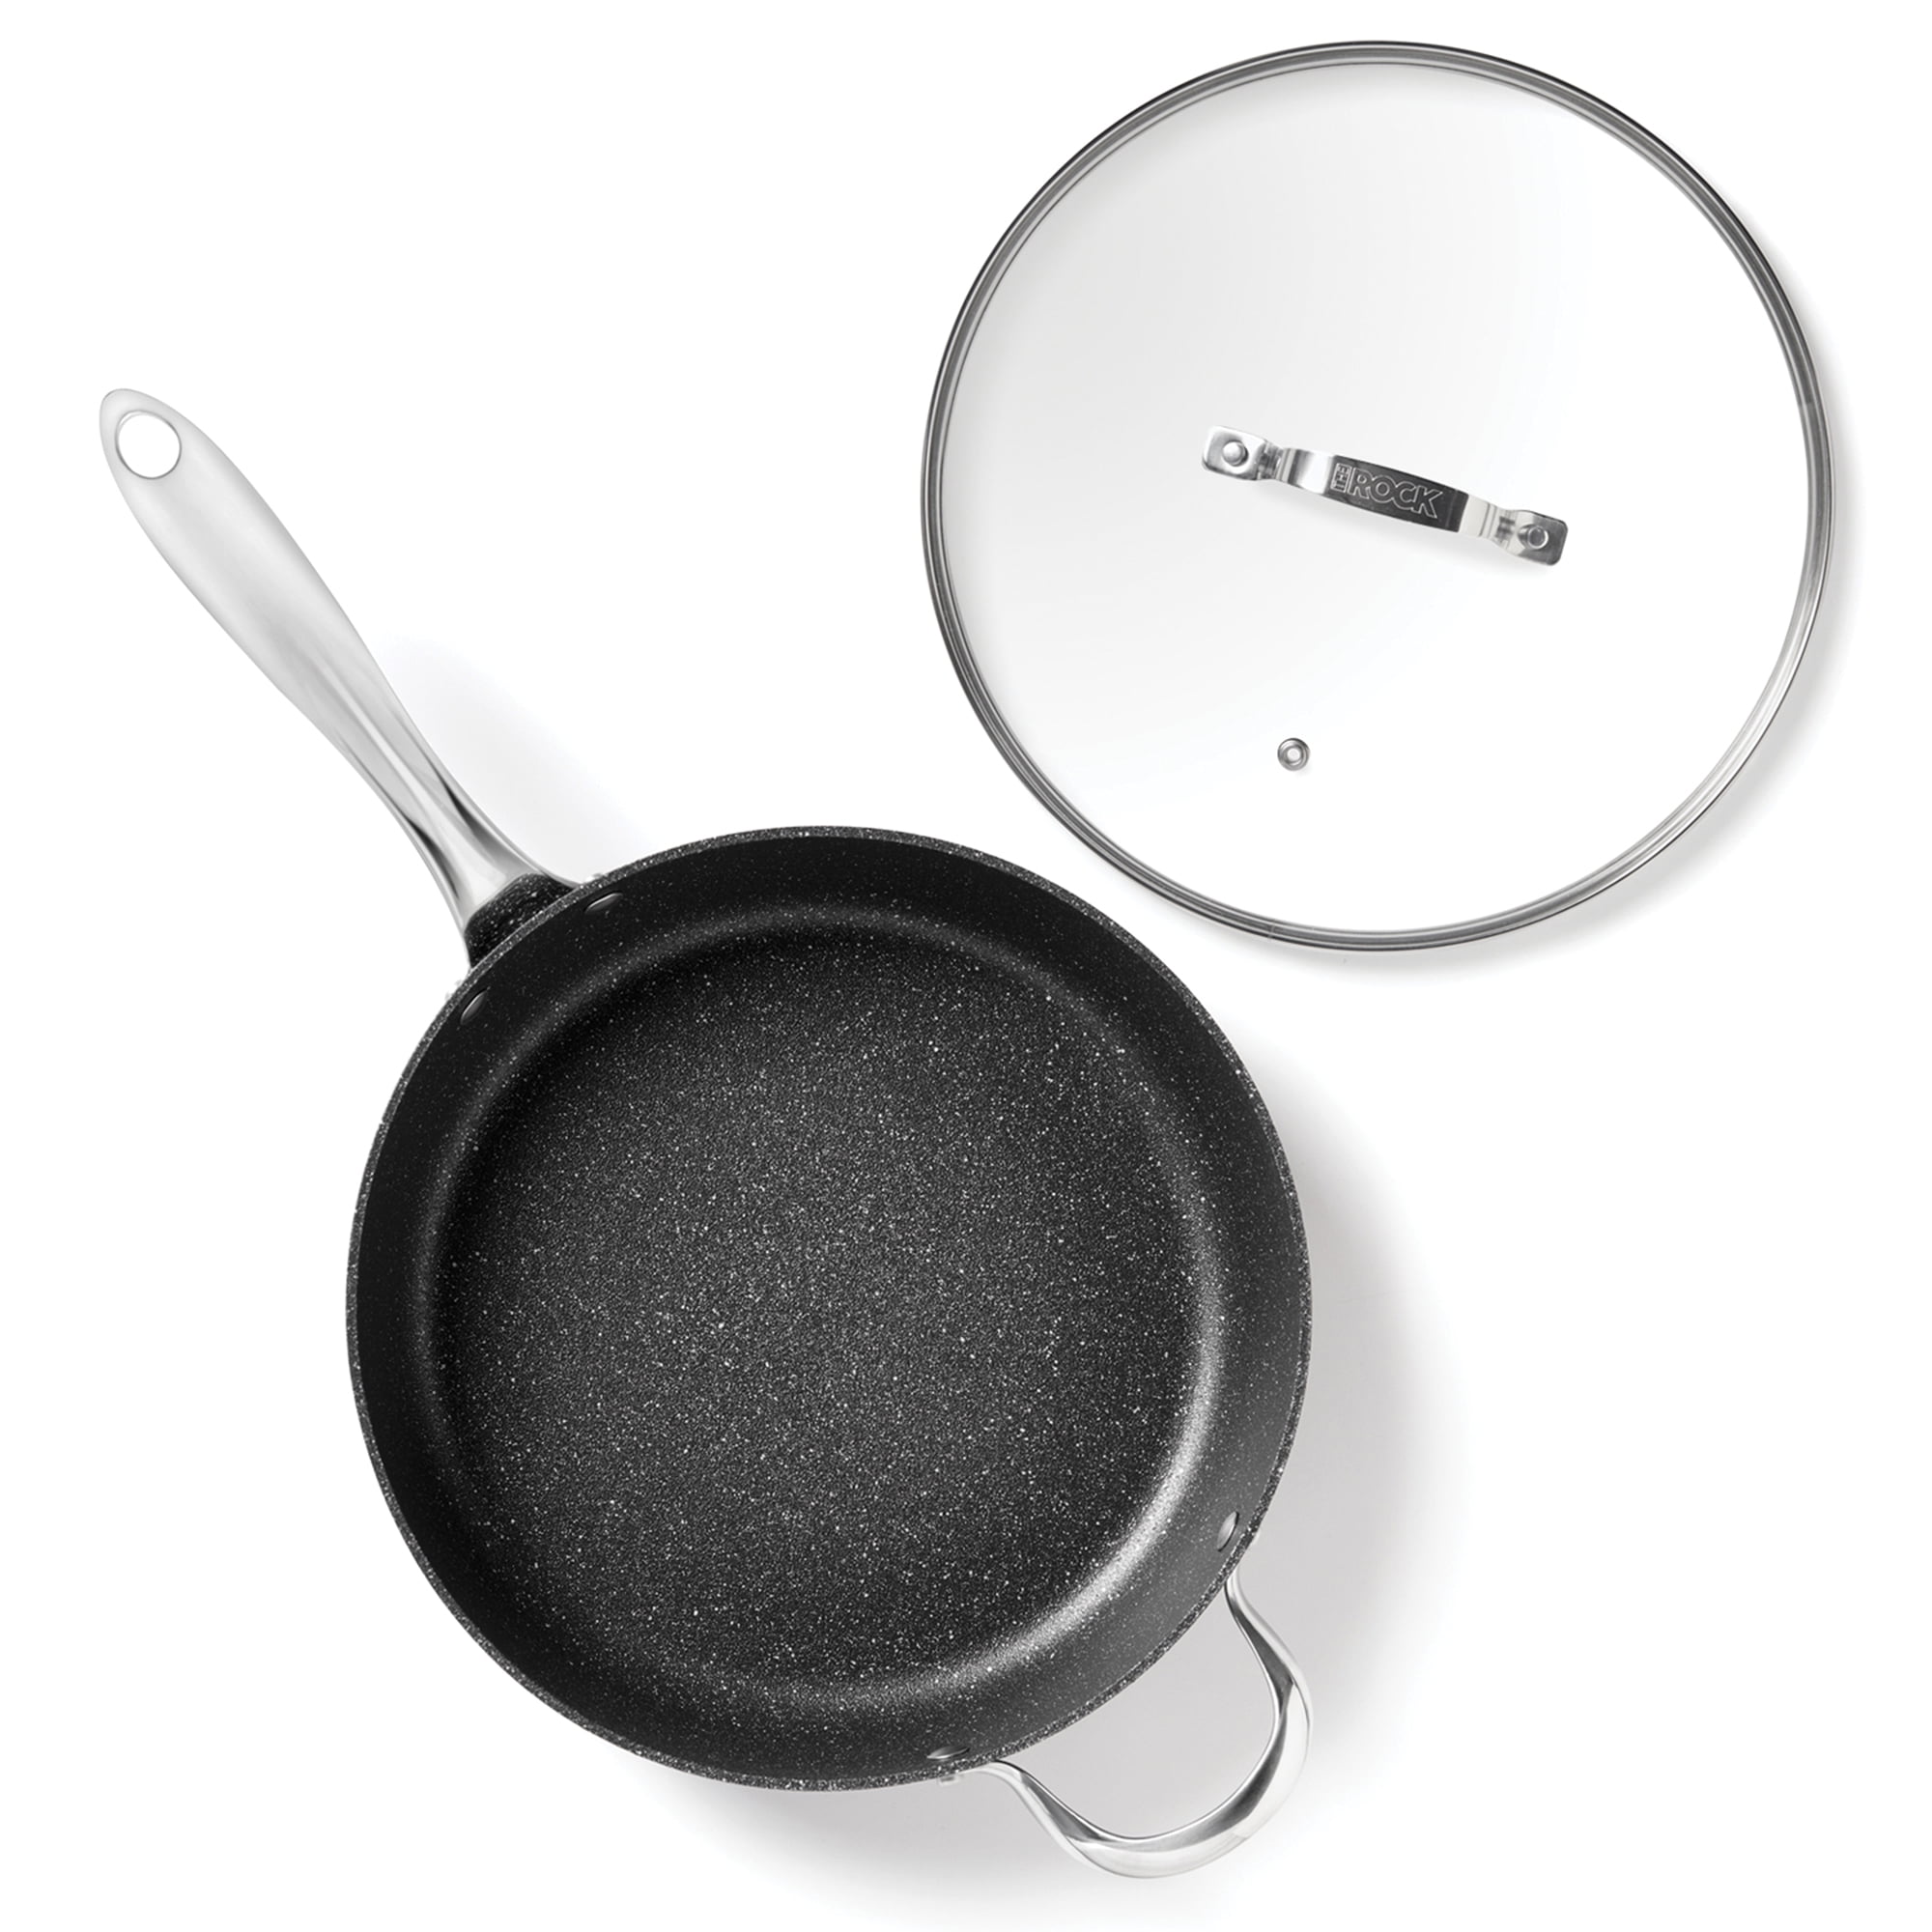 Rock Starfrit Pan Cookware Individual Replacement Non Stick Frying  Saucepans